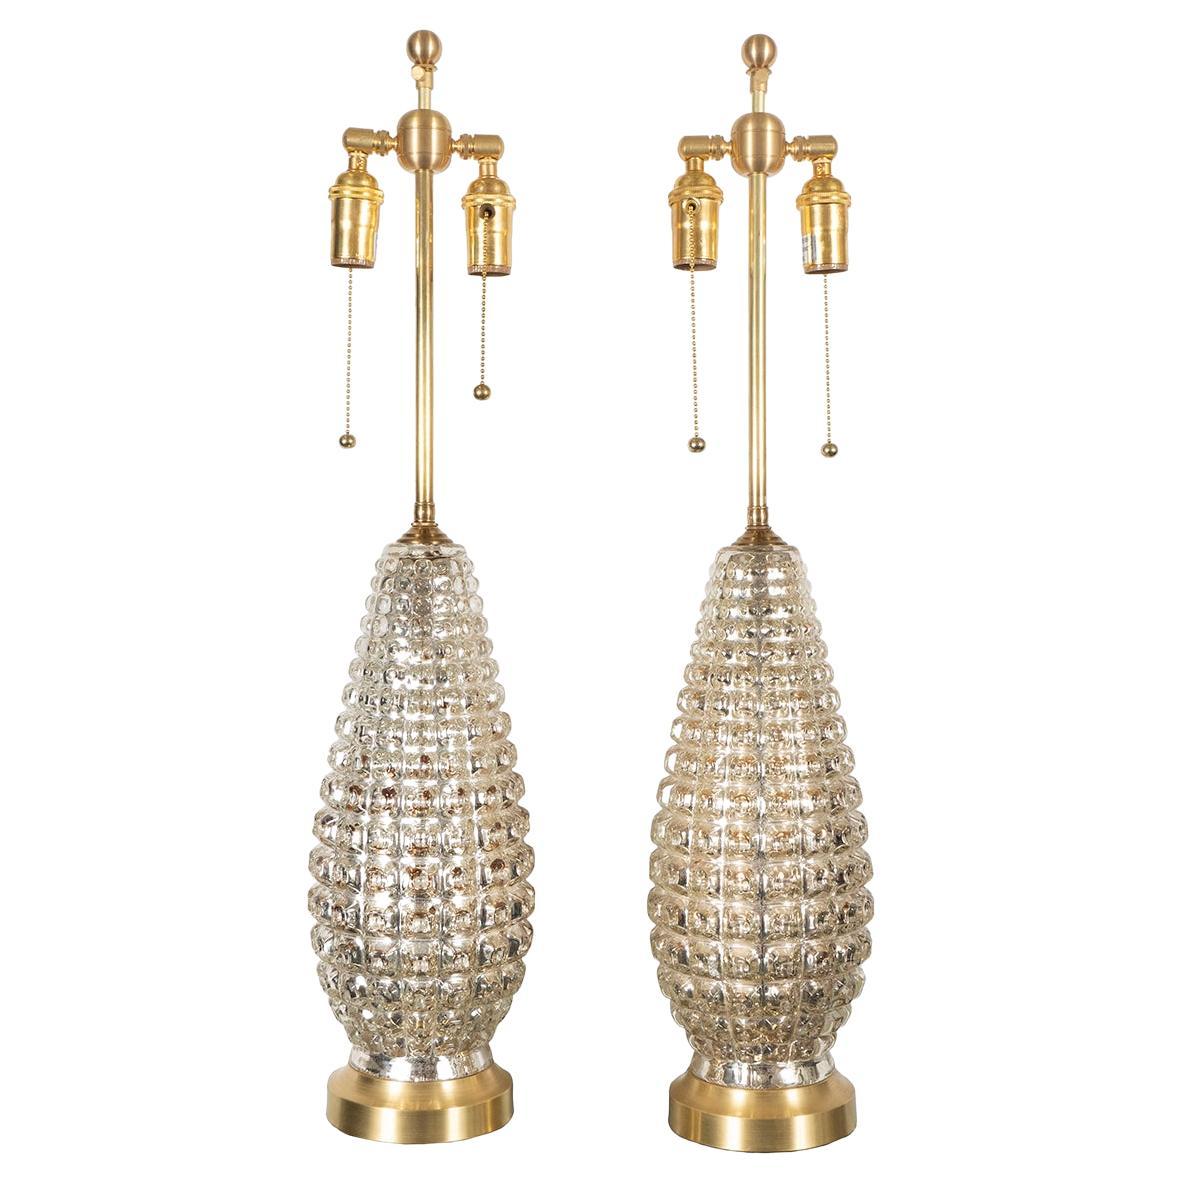 Pair of Teardrop Mercury Glass Lamps For Sale